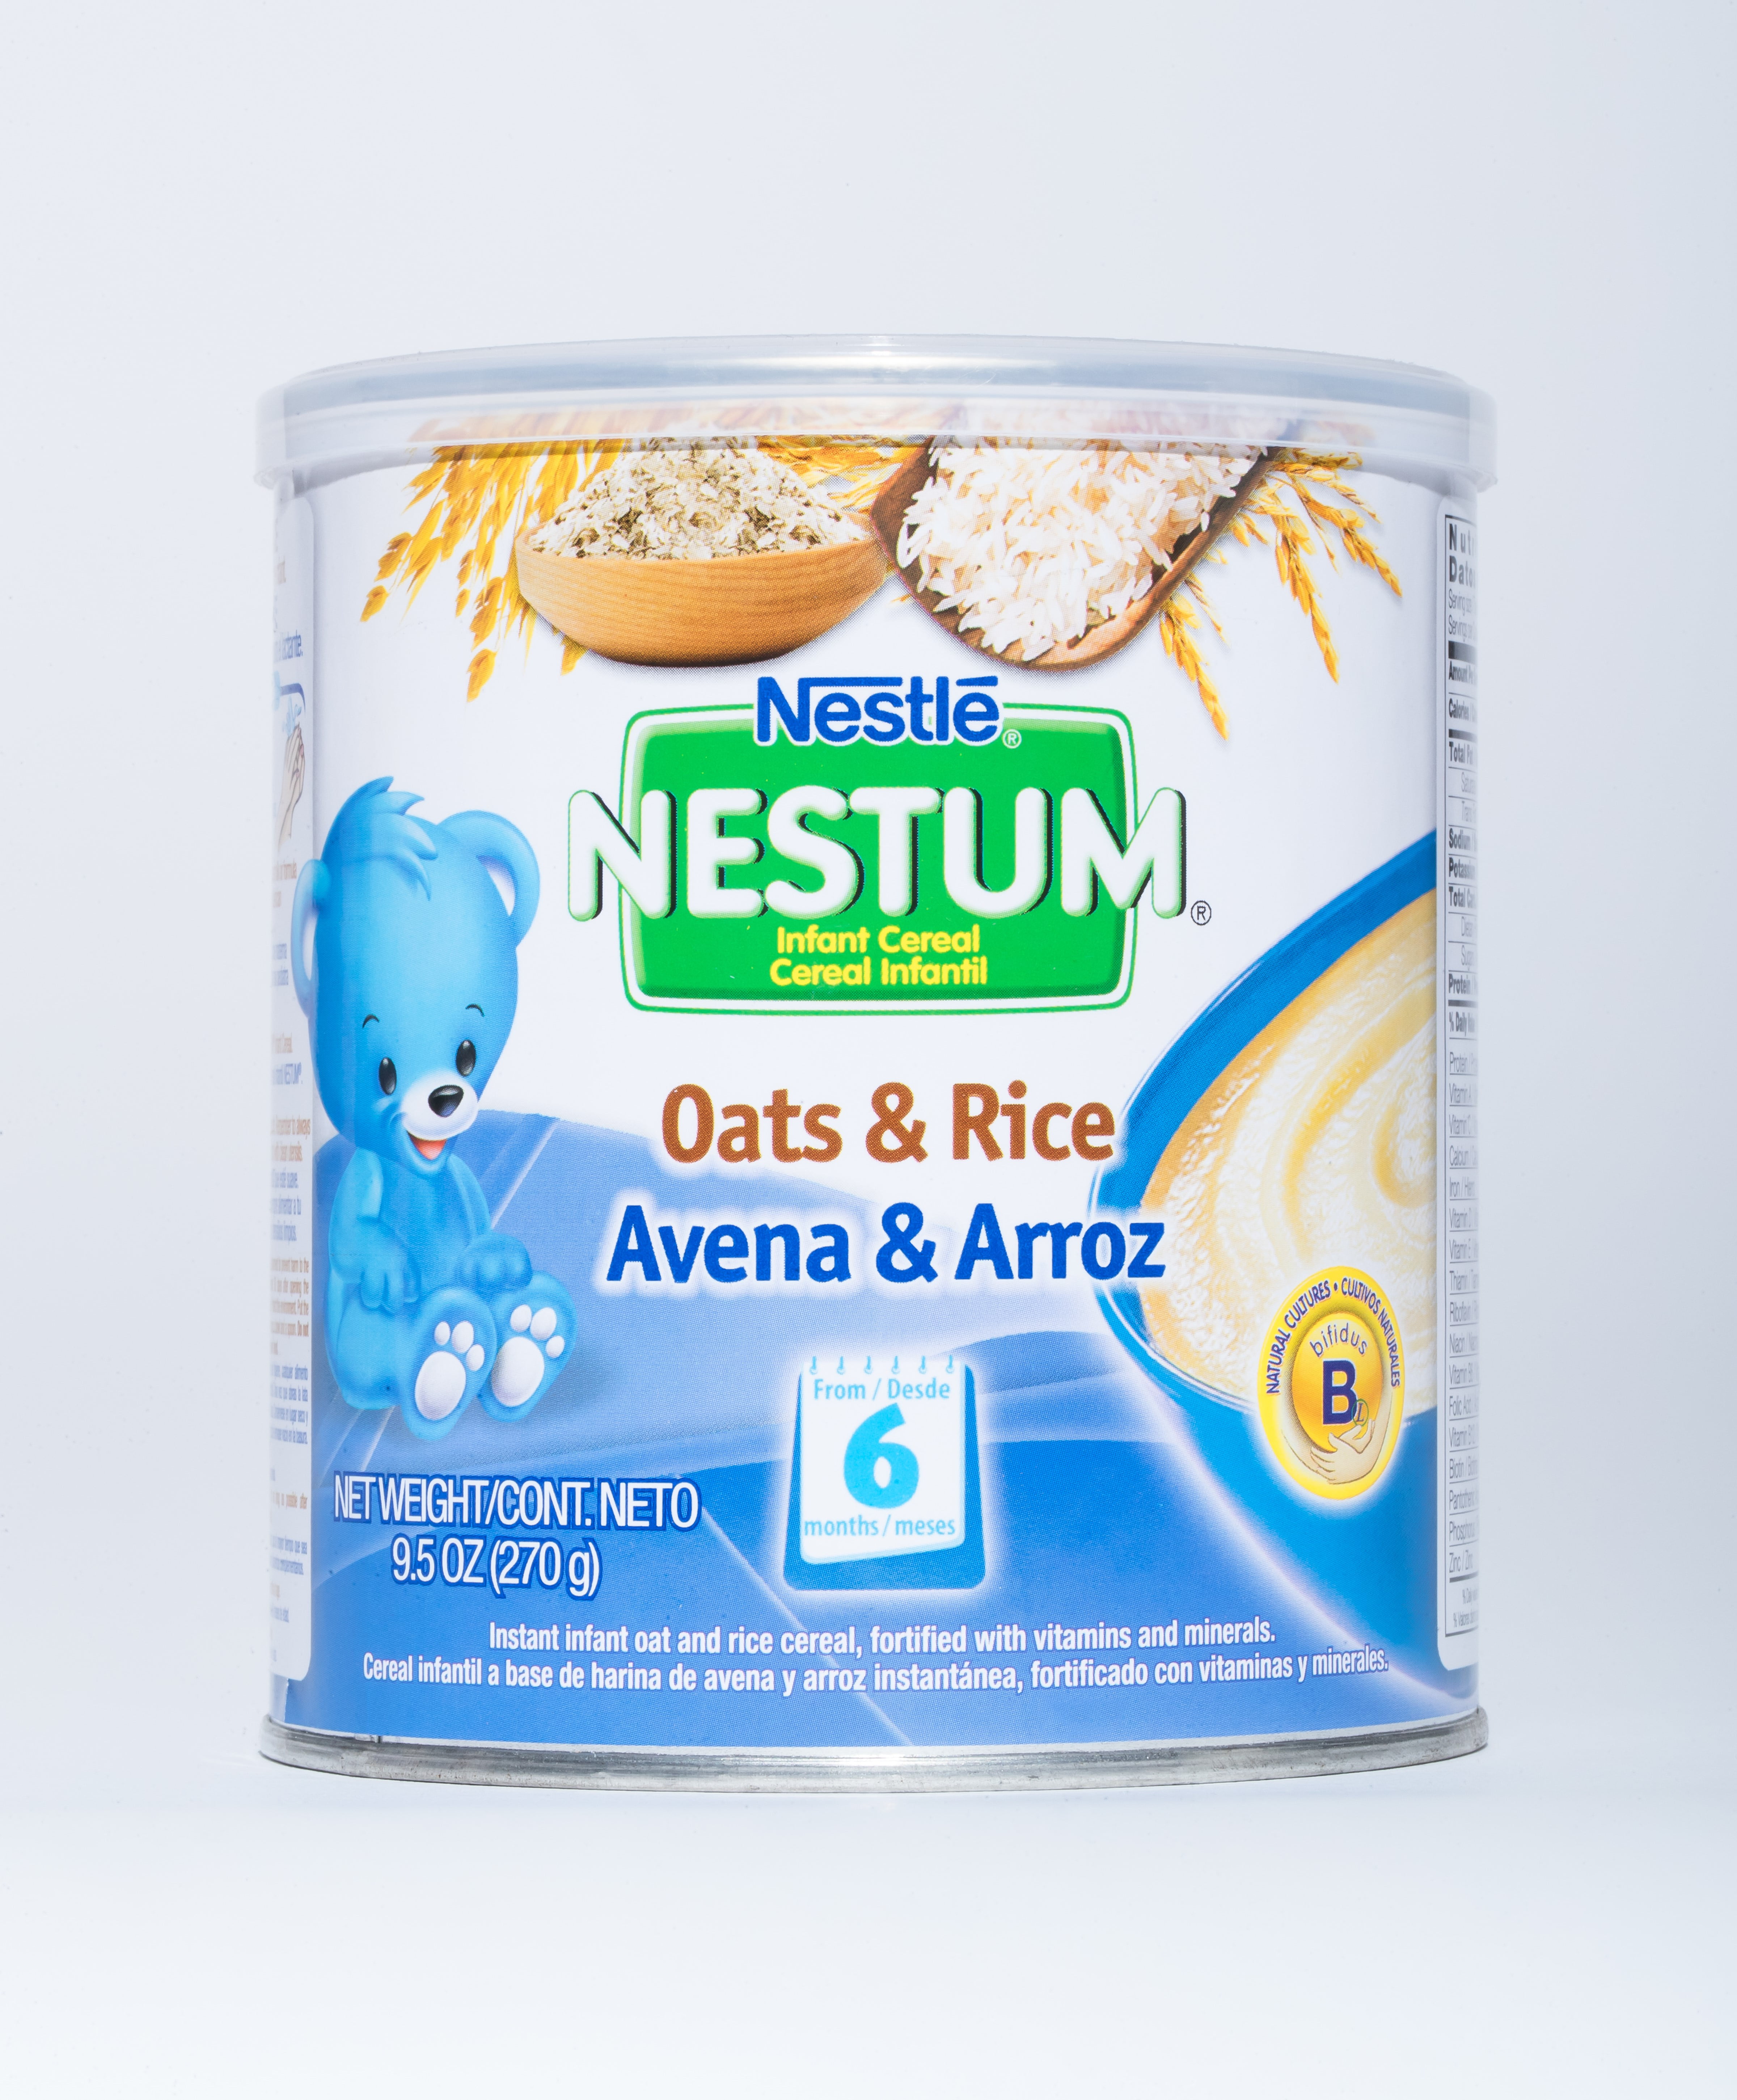 Nestle Nestum Mixed Grains Oats (500 grams) - RichesM Healthcare